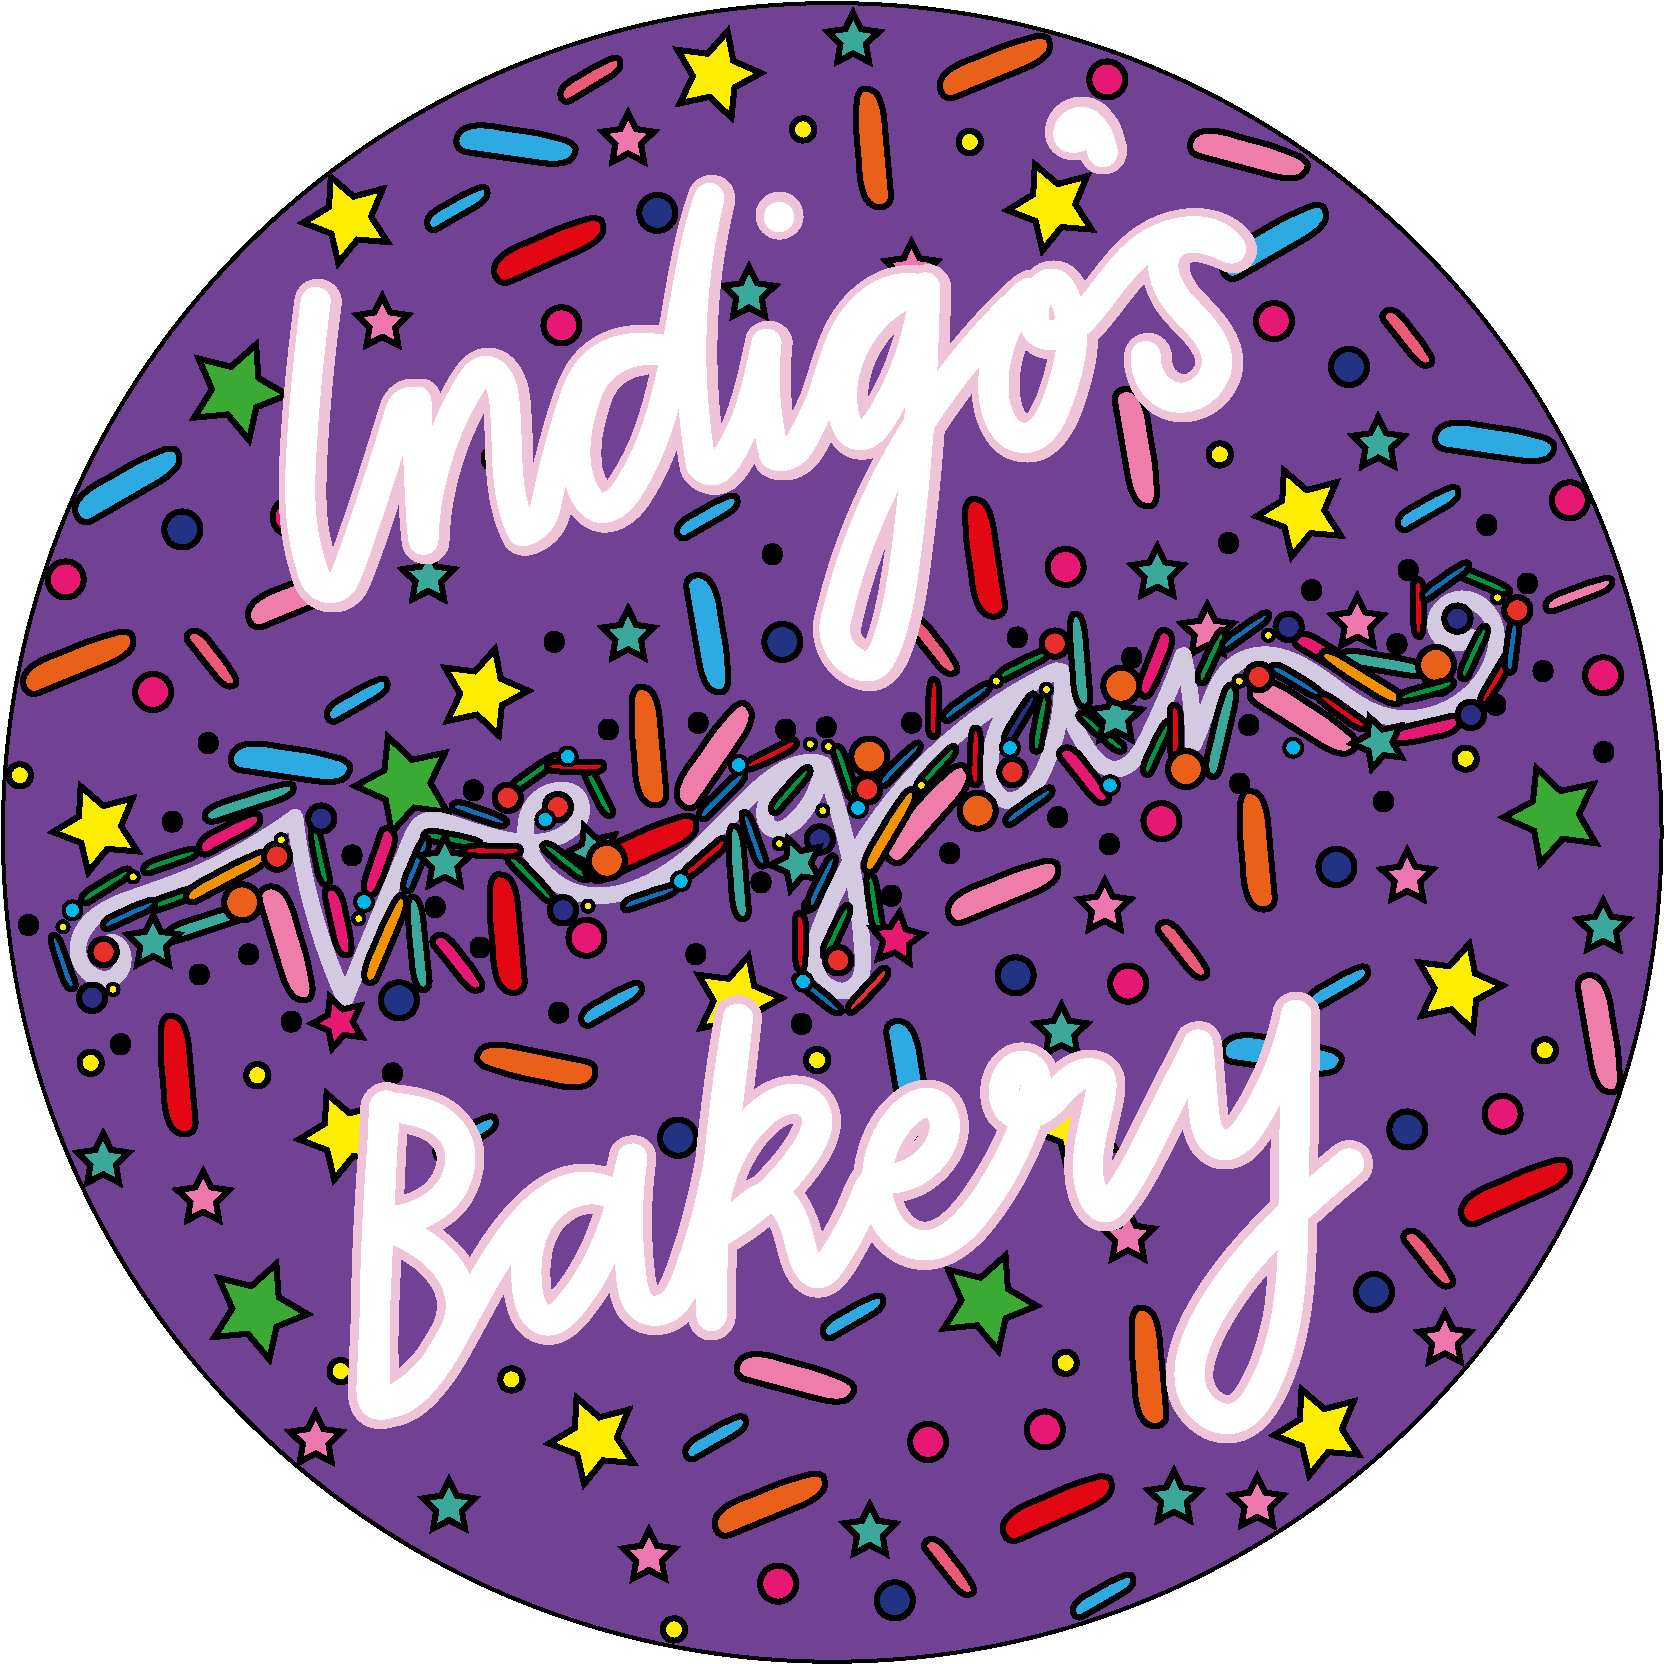 Indigo's Vegan Bakery